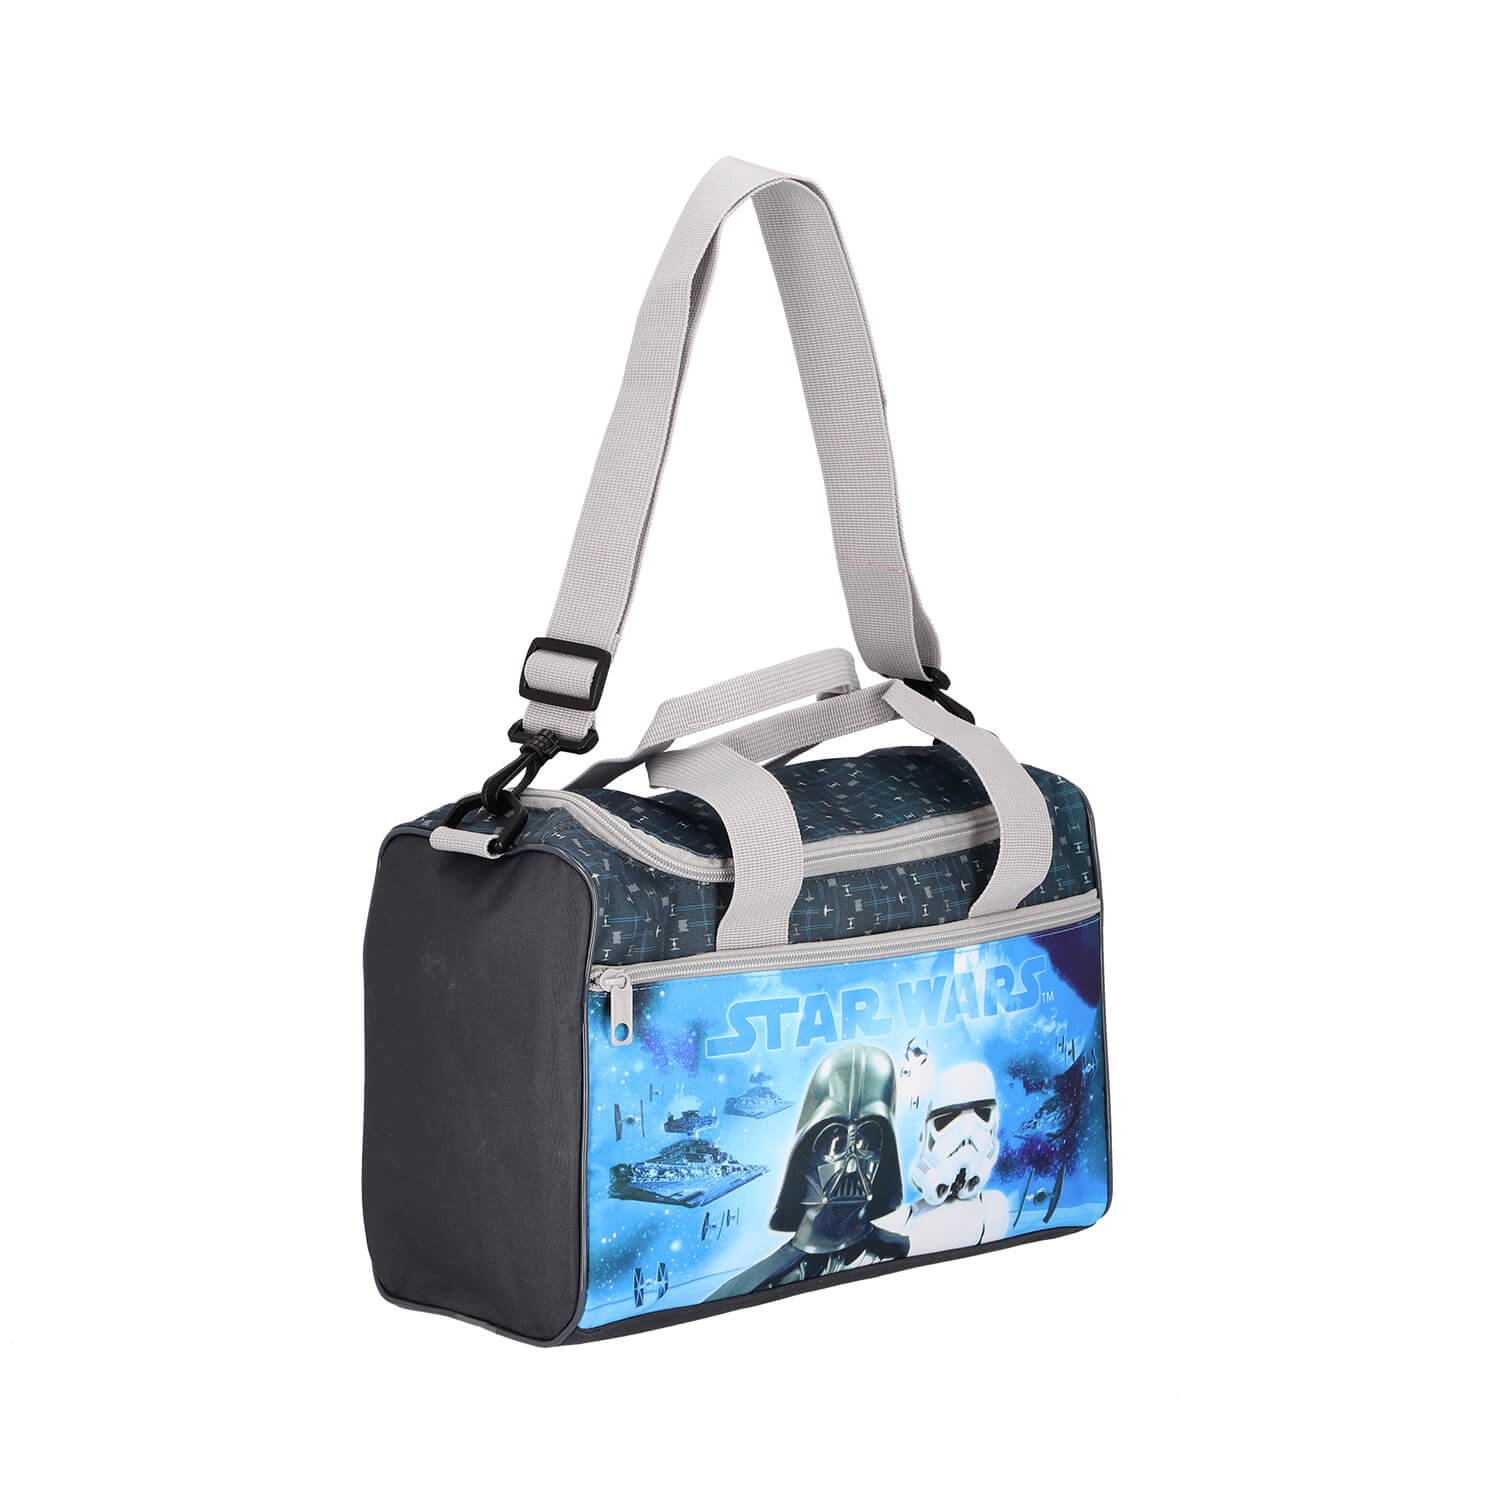 Scooli Sporttasche mit Star Wars Motiv in blau/grau